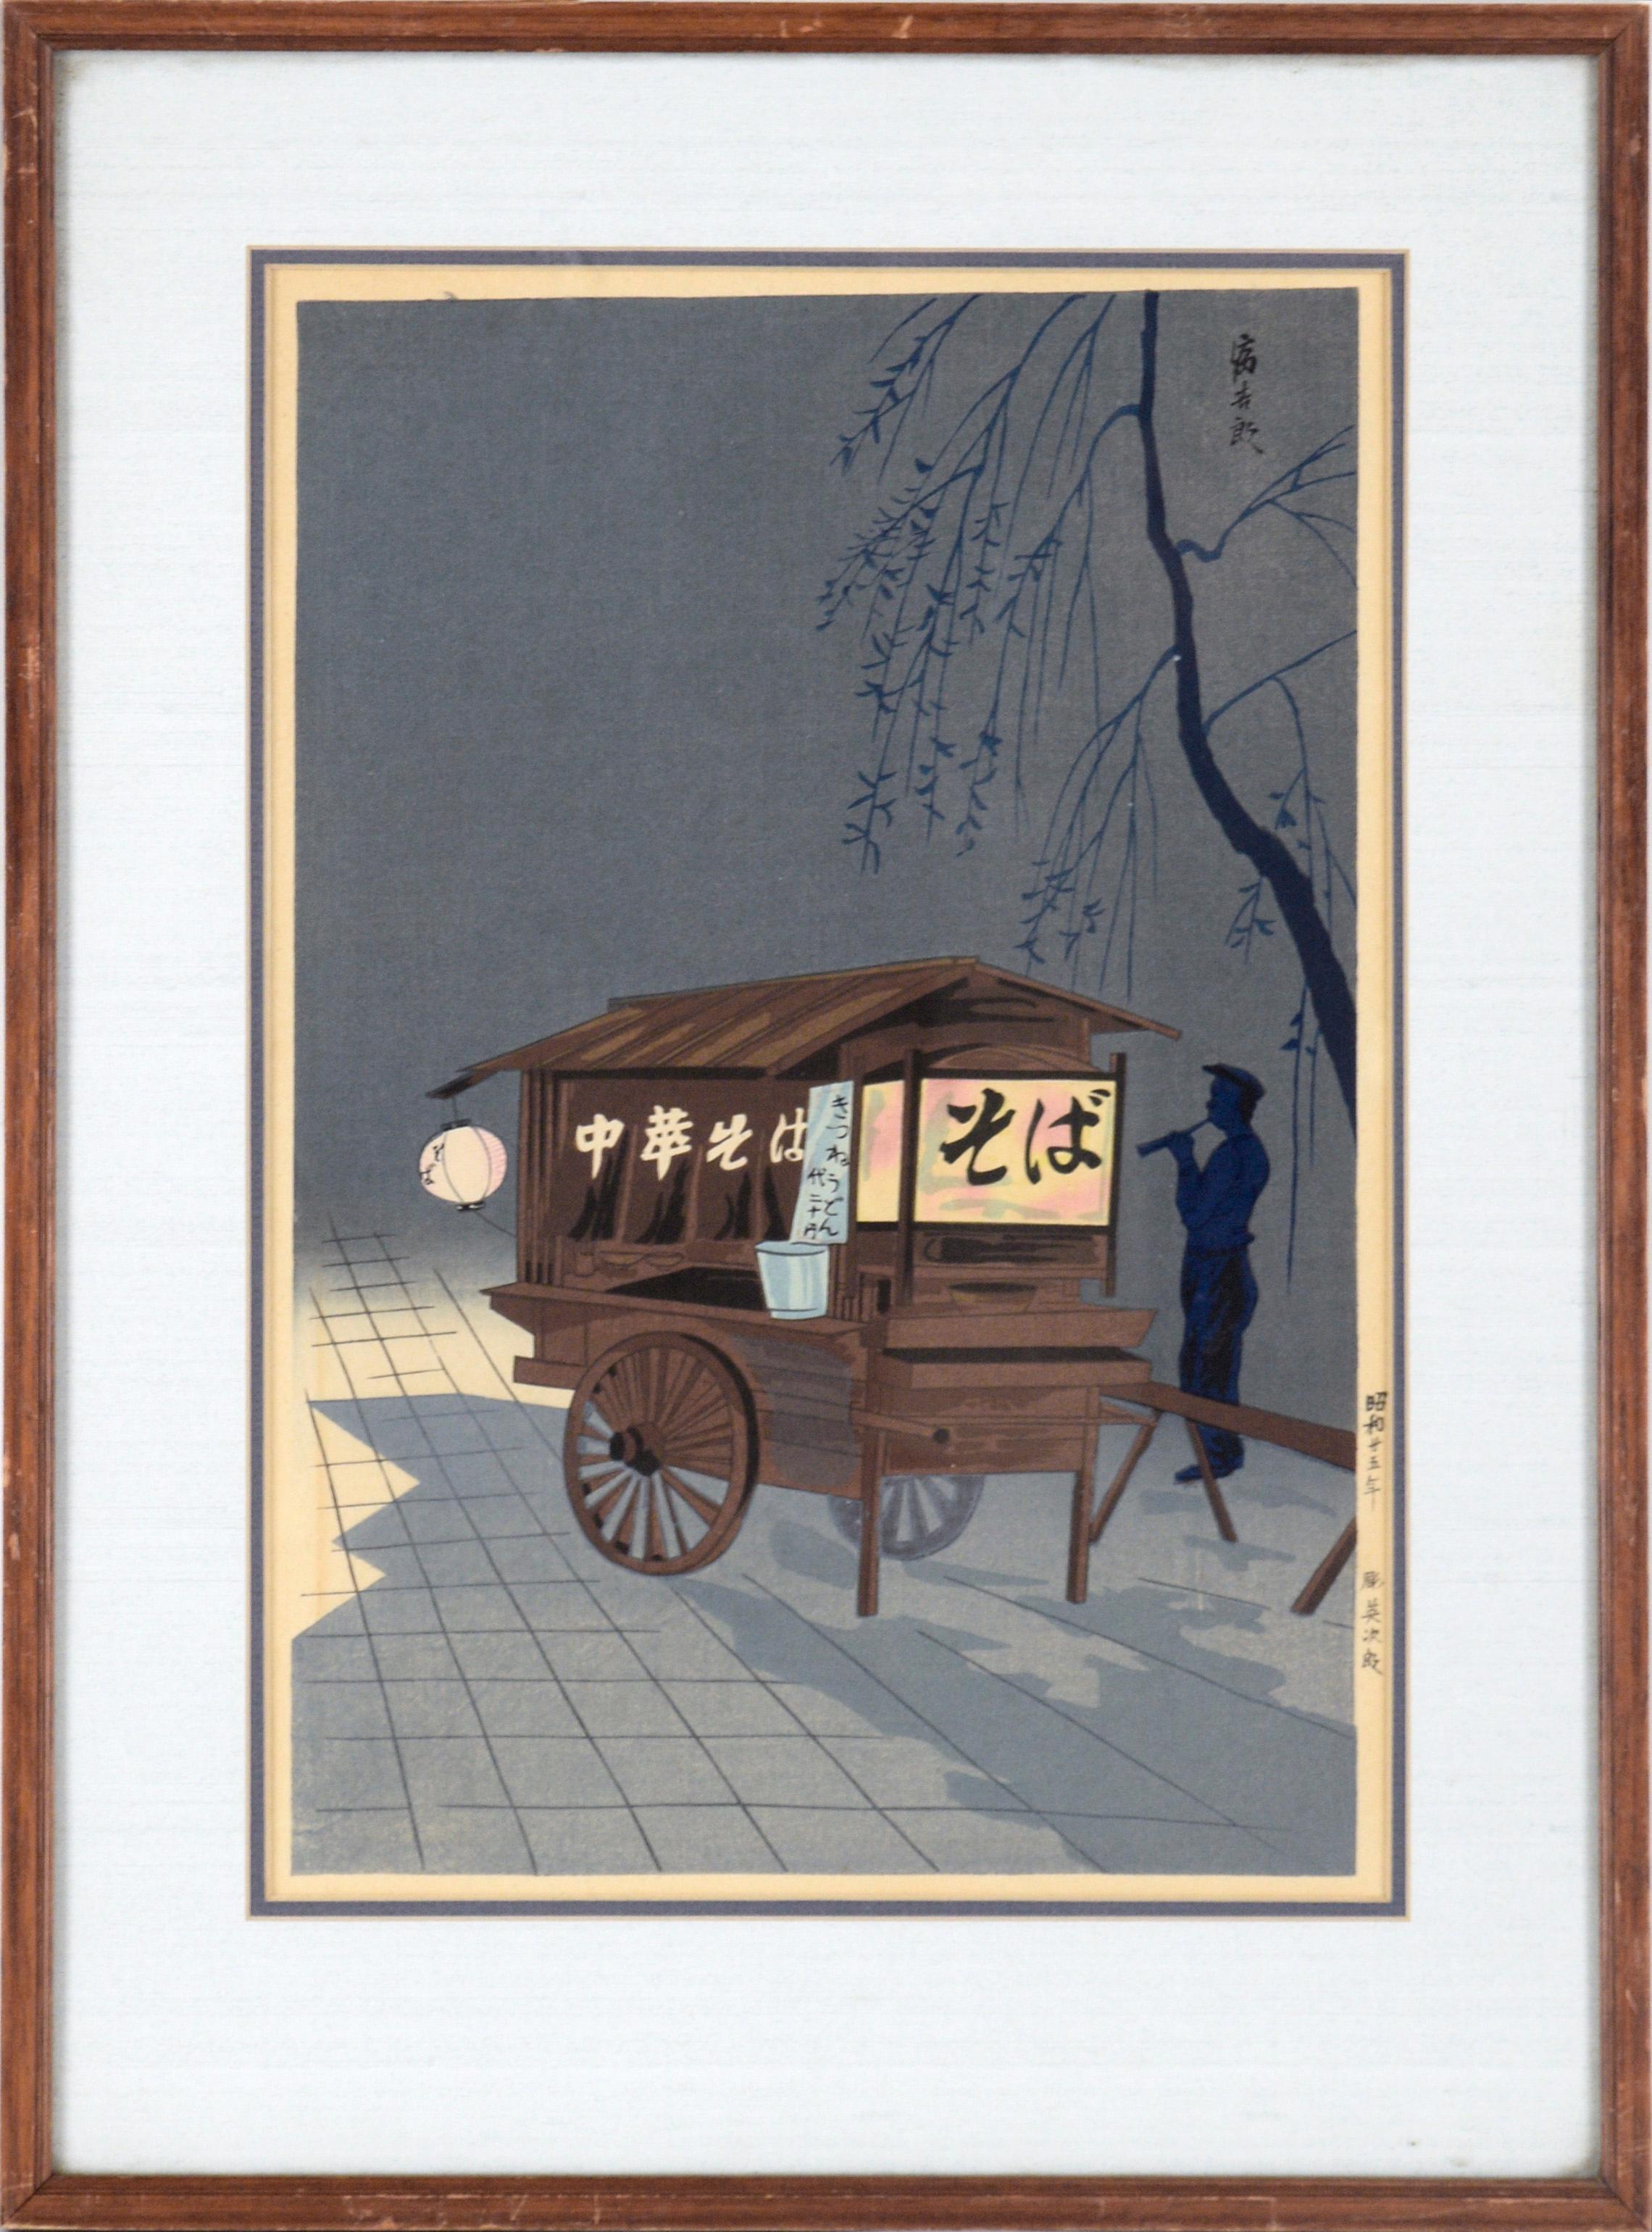 Tomikichiro Tokuriki Figurative Print - Soba Noodle Vendor Cart at Night - Japanese Woodblock in Ink on Paper